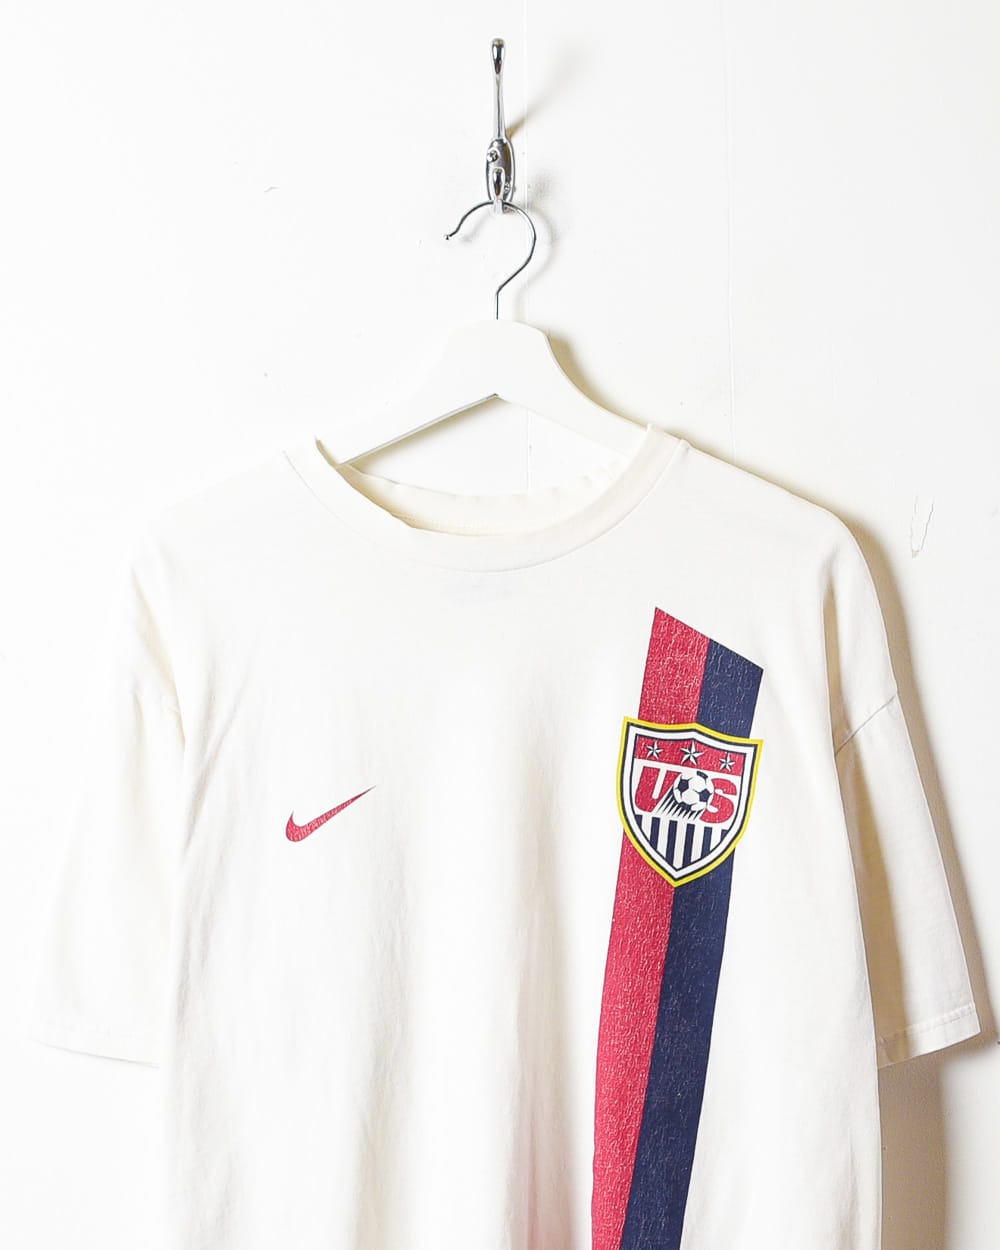 White Nike Team USA Soccer T-Shirt - Large